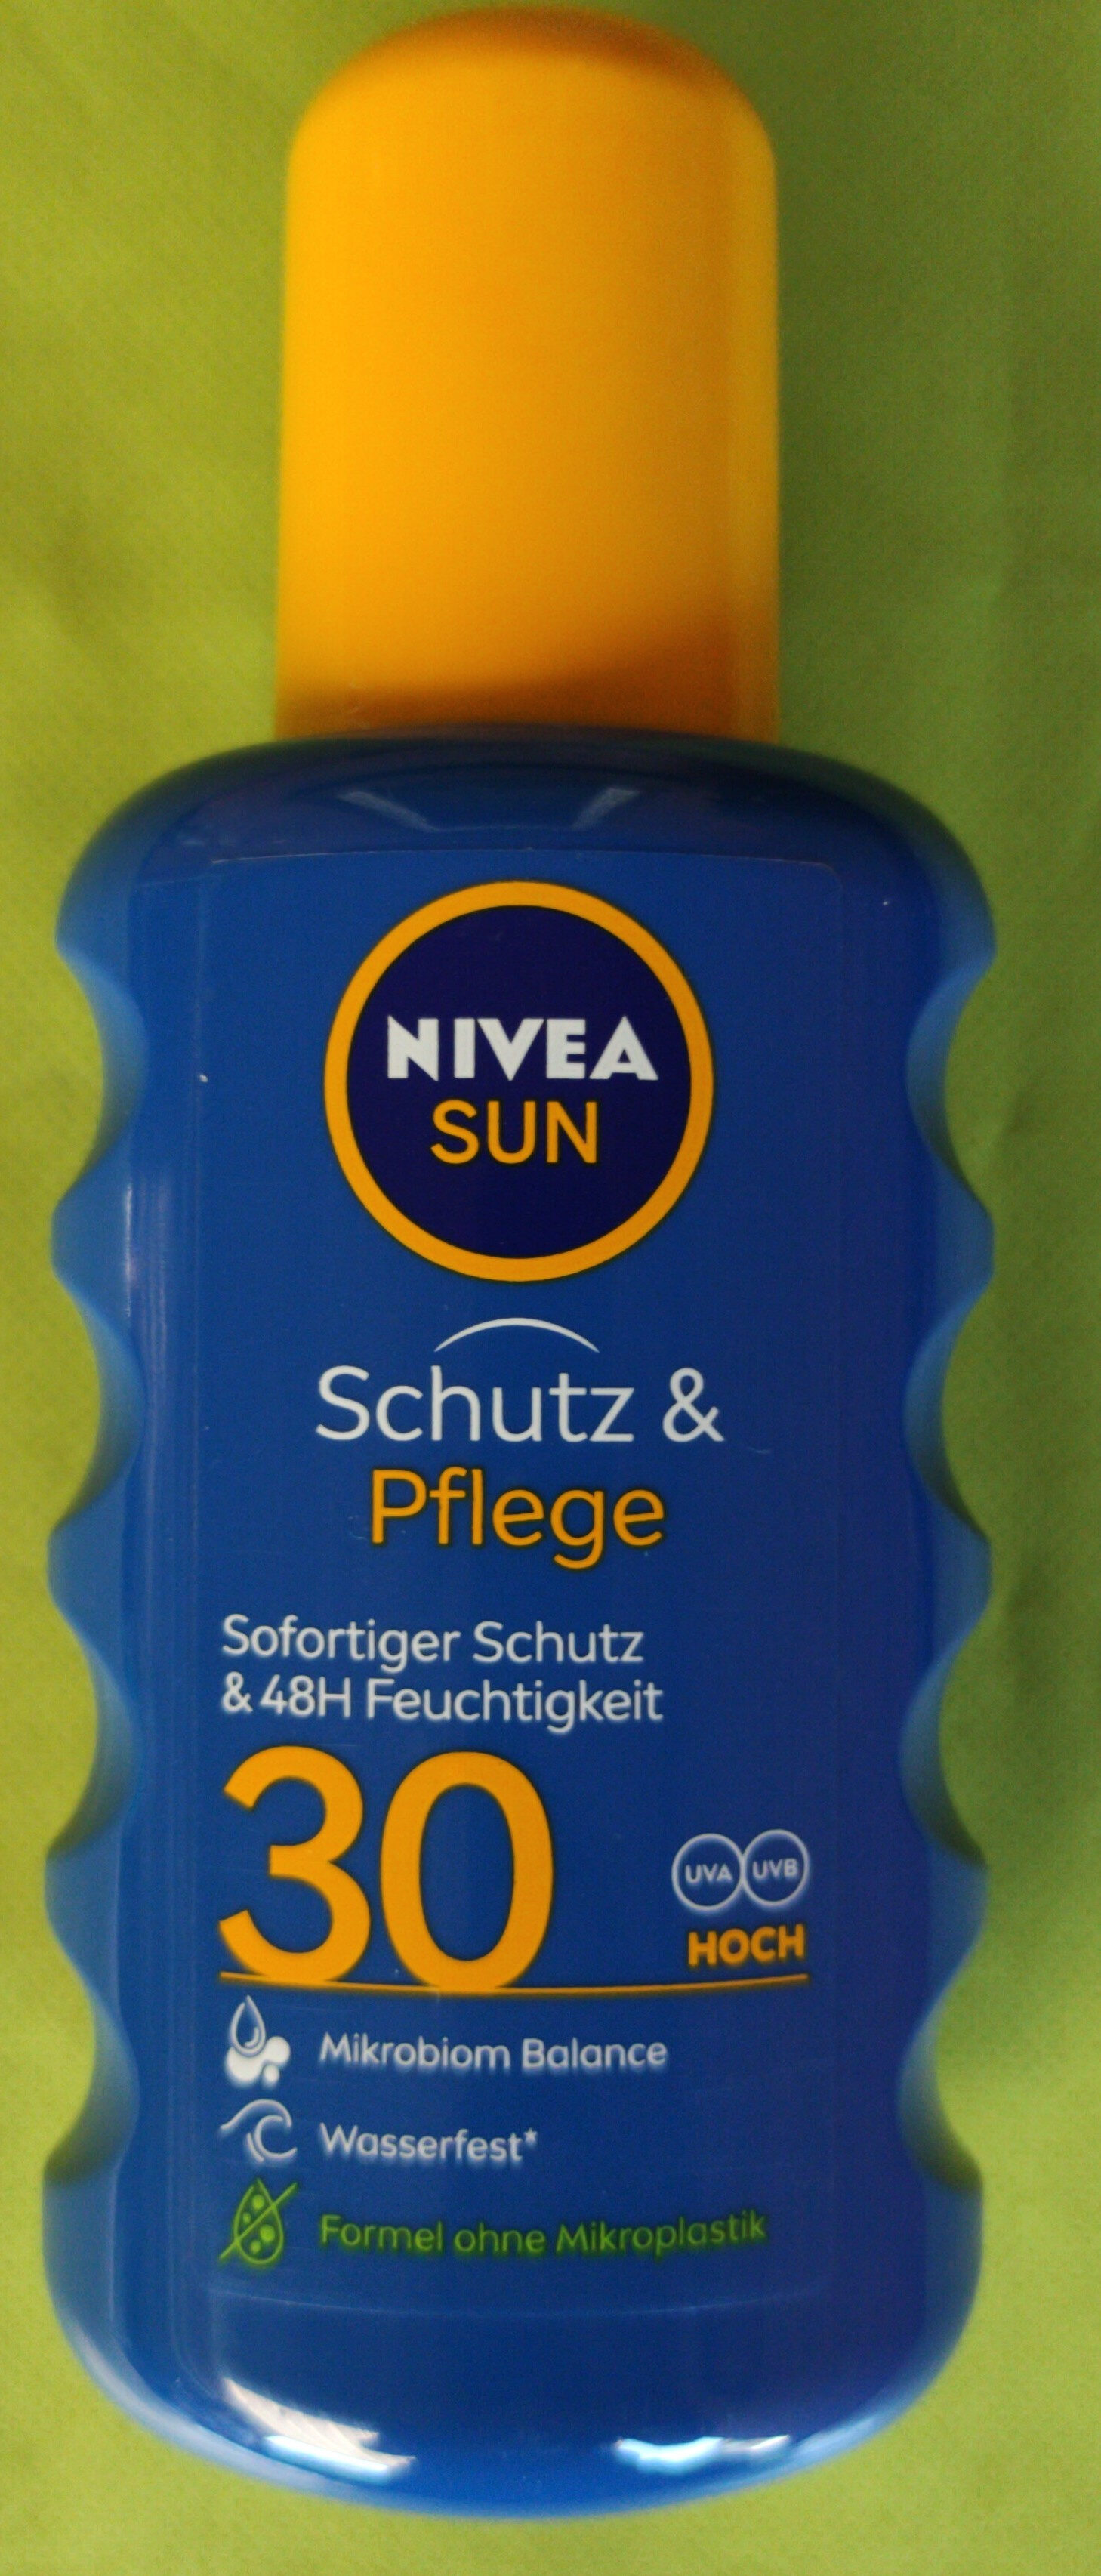 Schutz & Pflege Sonnenspray 30 - Produit - de